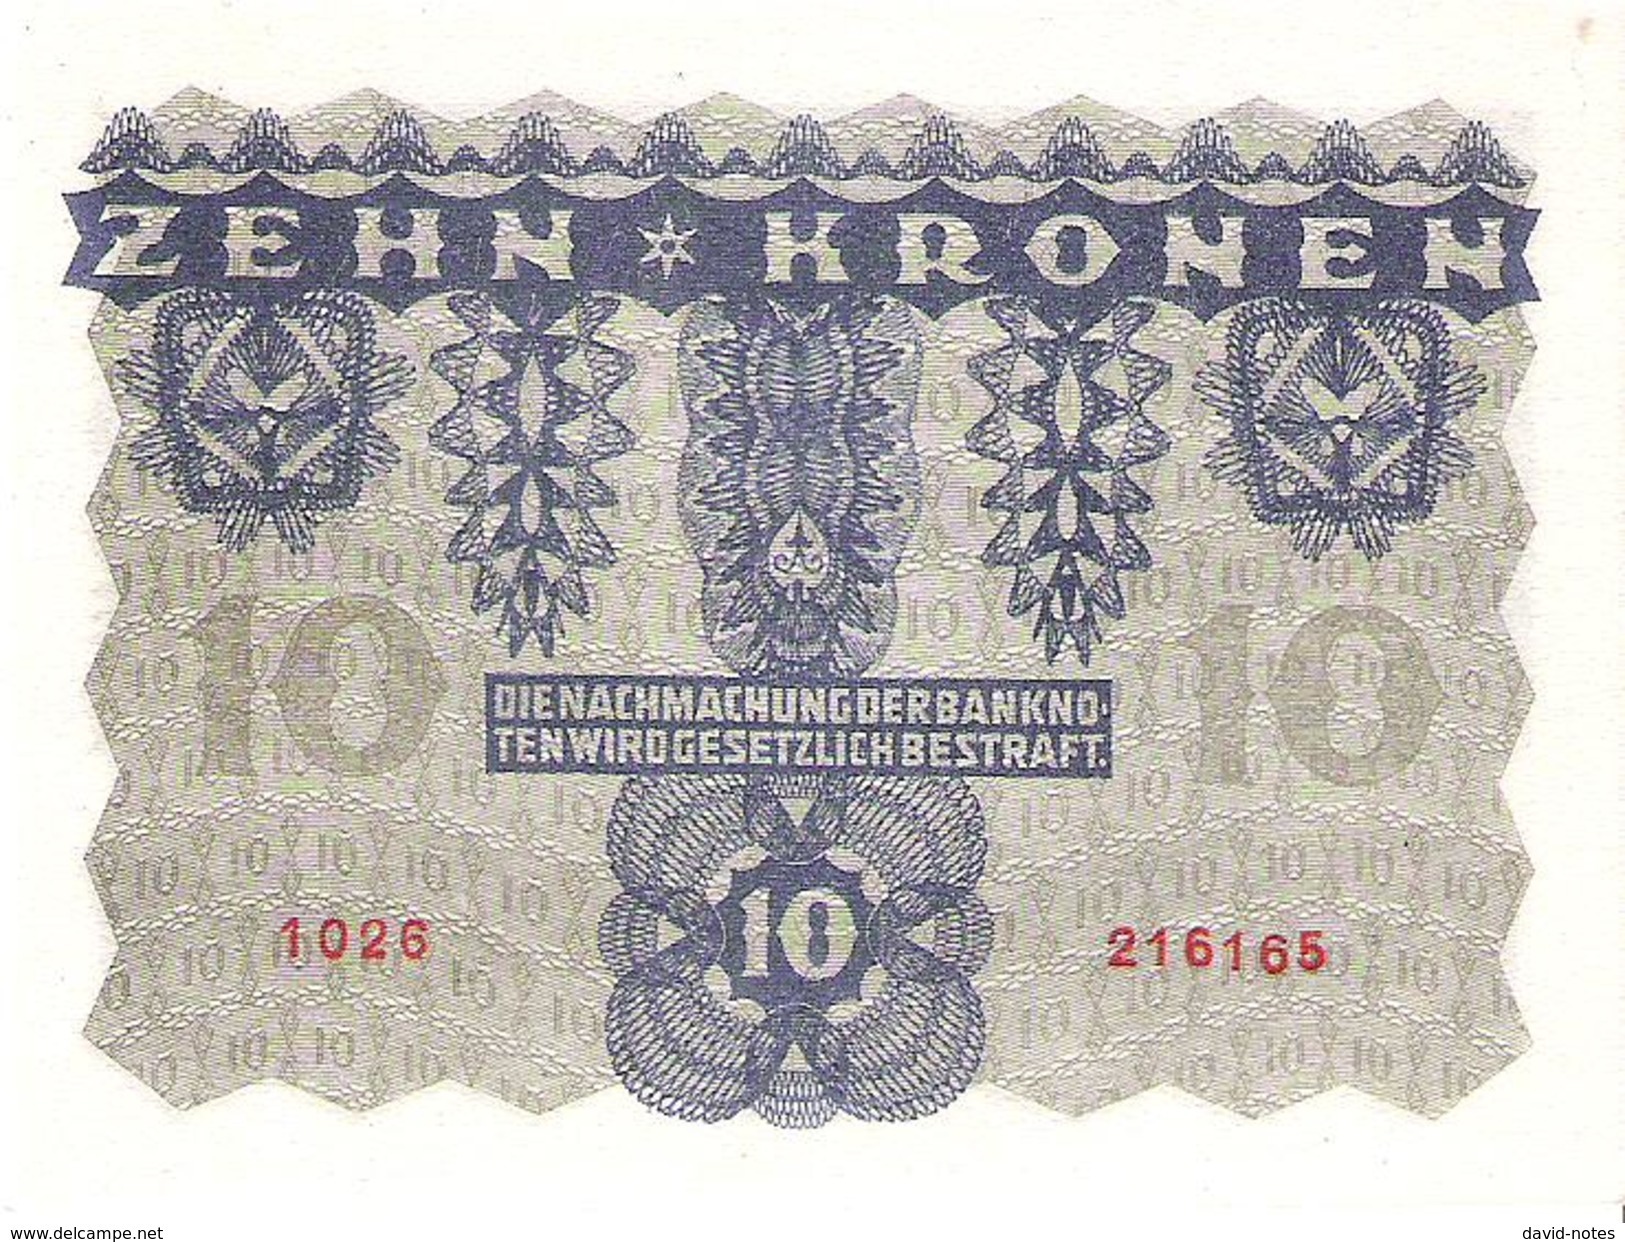 Austria - Pick 75 - 10 Kronen 1922 - AUnc - Austria